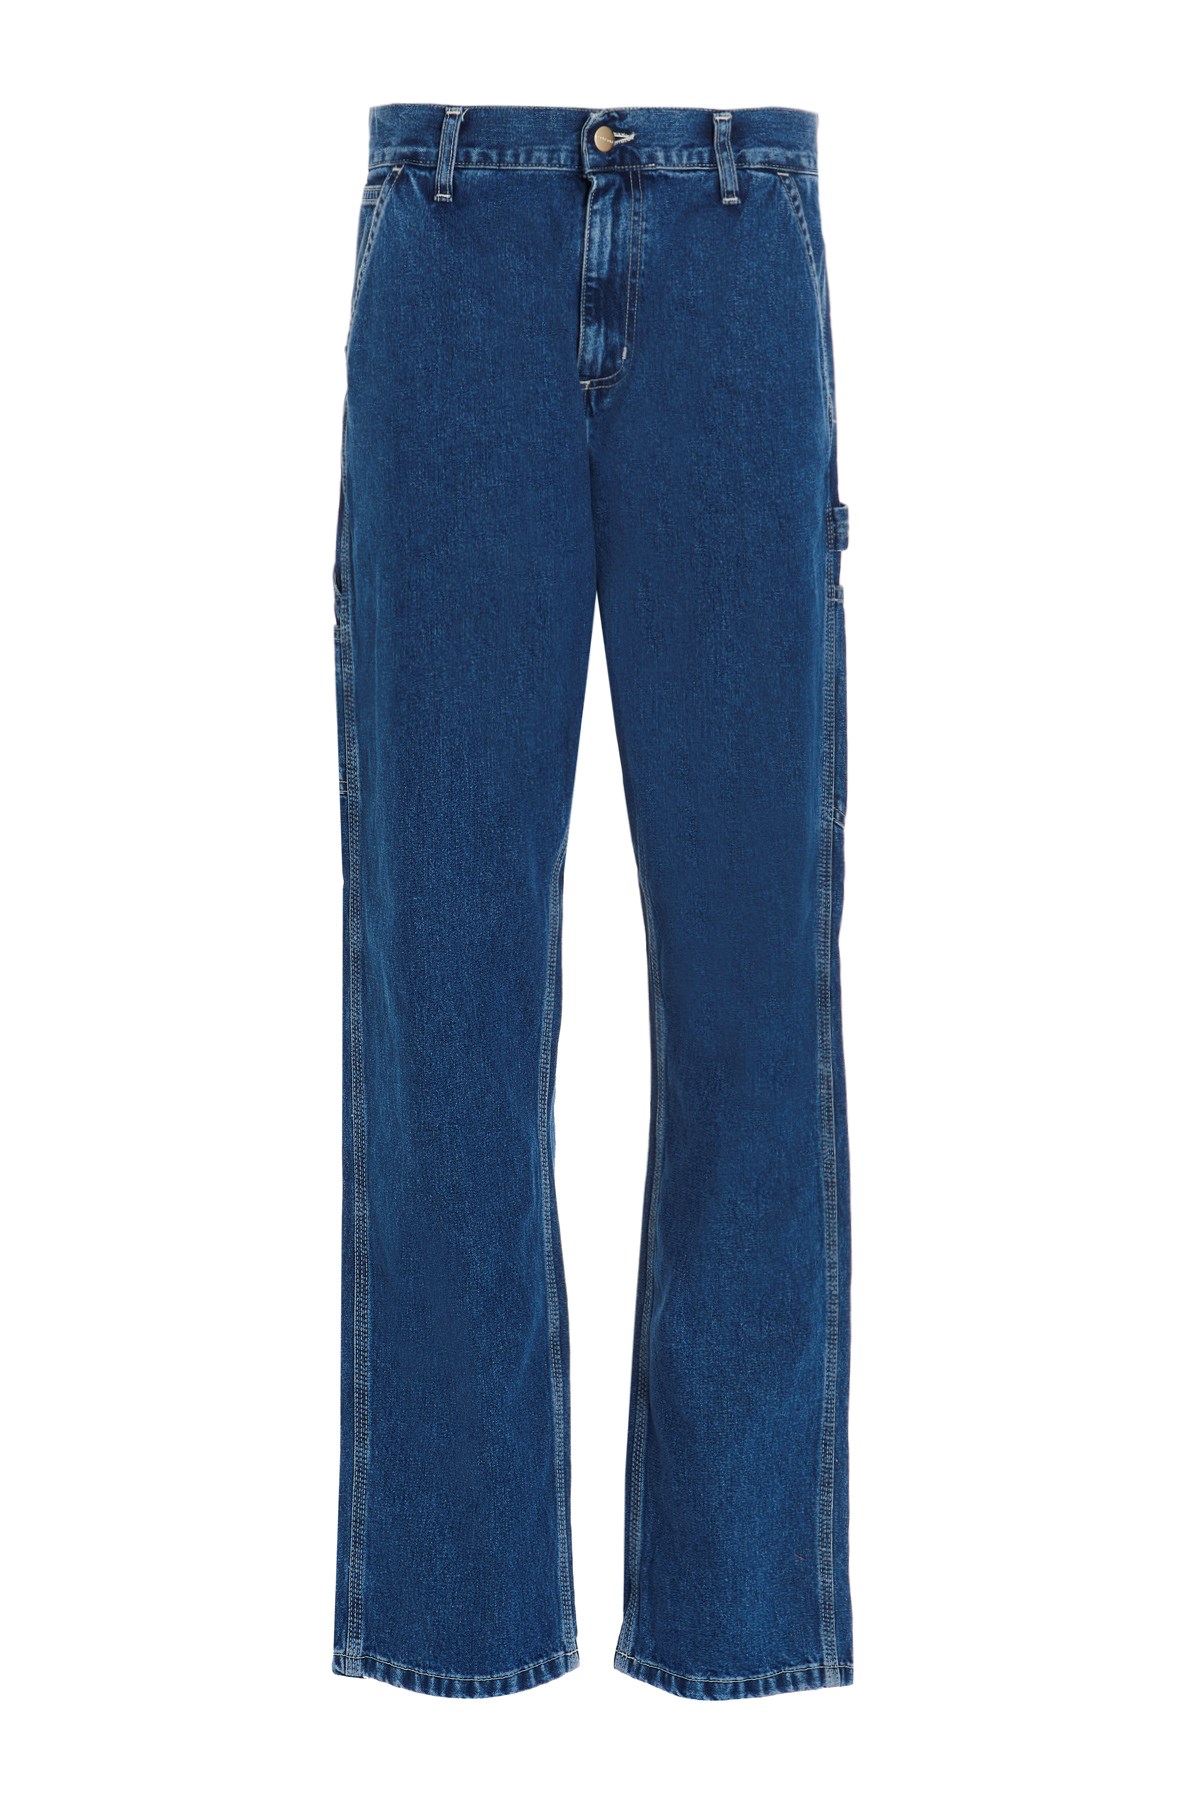 CARHARTT WIP 'Ruck Single Knee’ Jeans